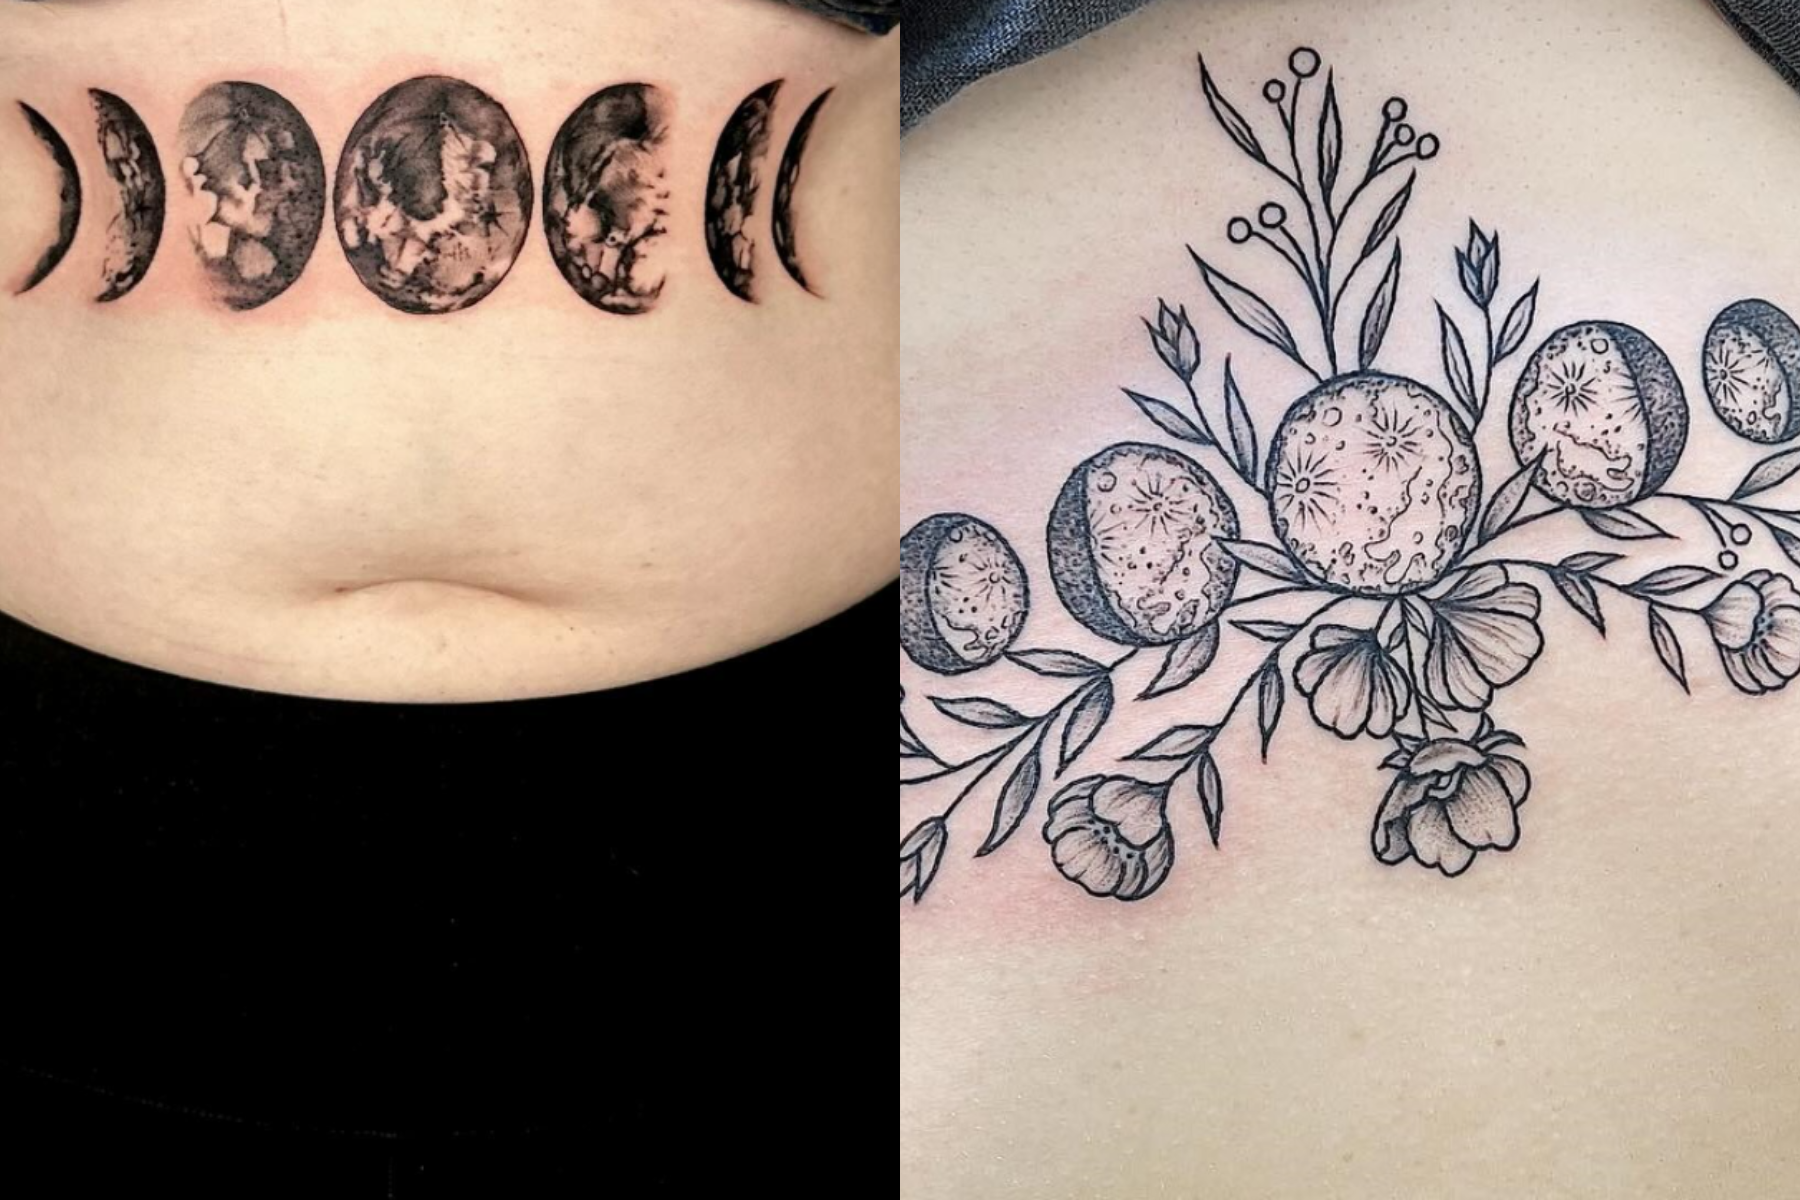 Ladies with black moon phase tattoos on their upper abdomen